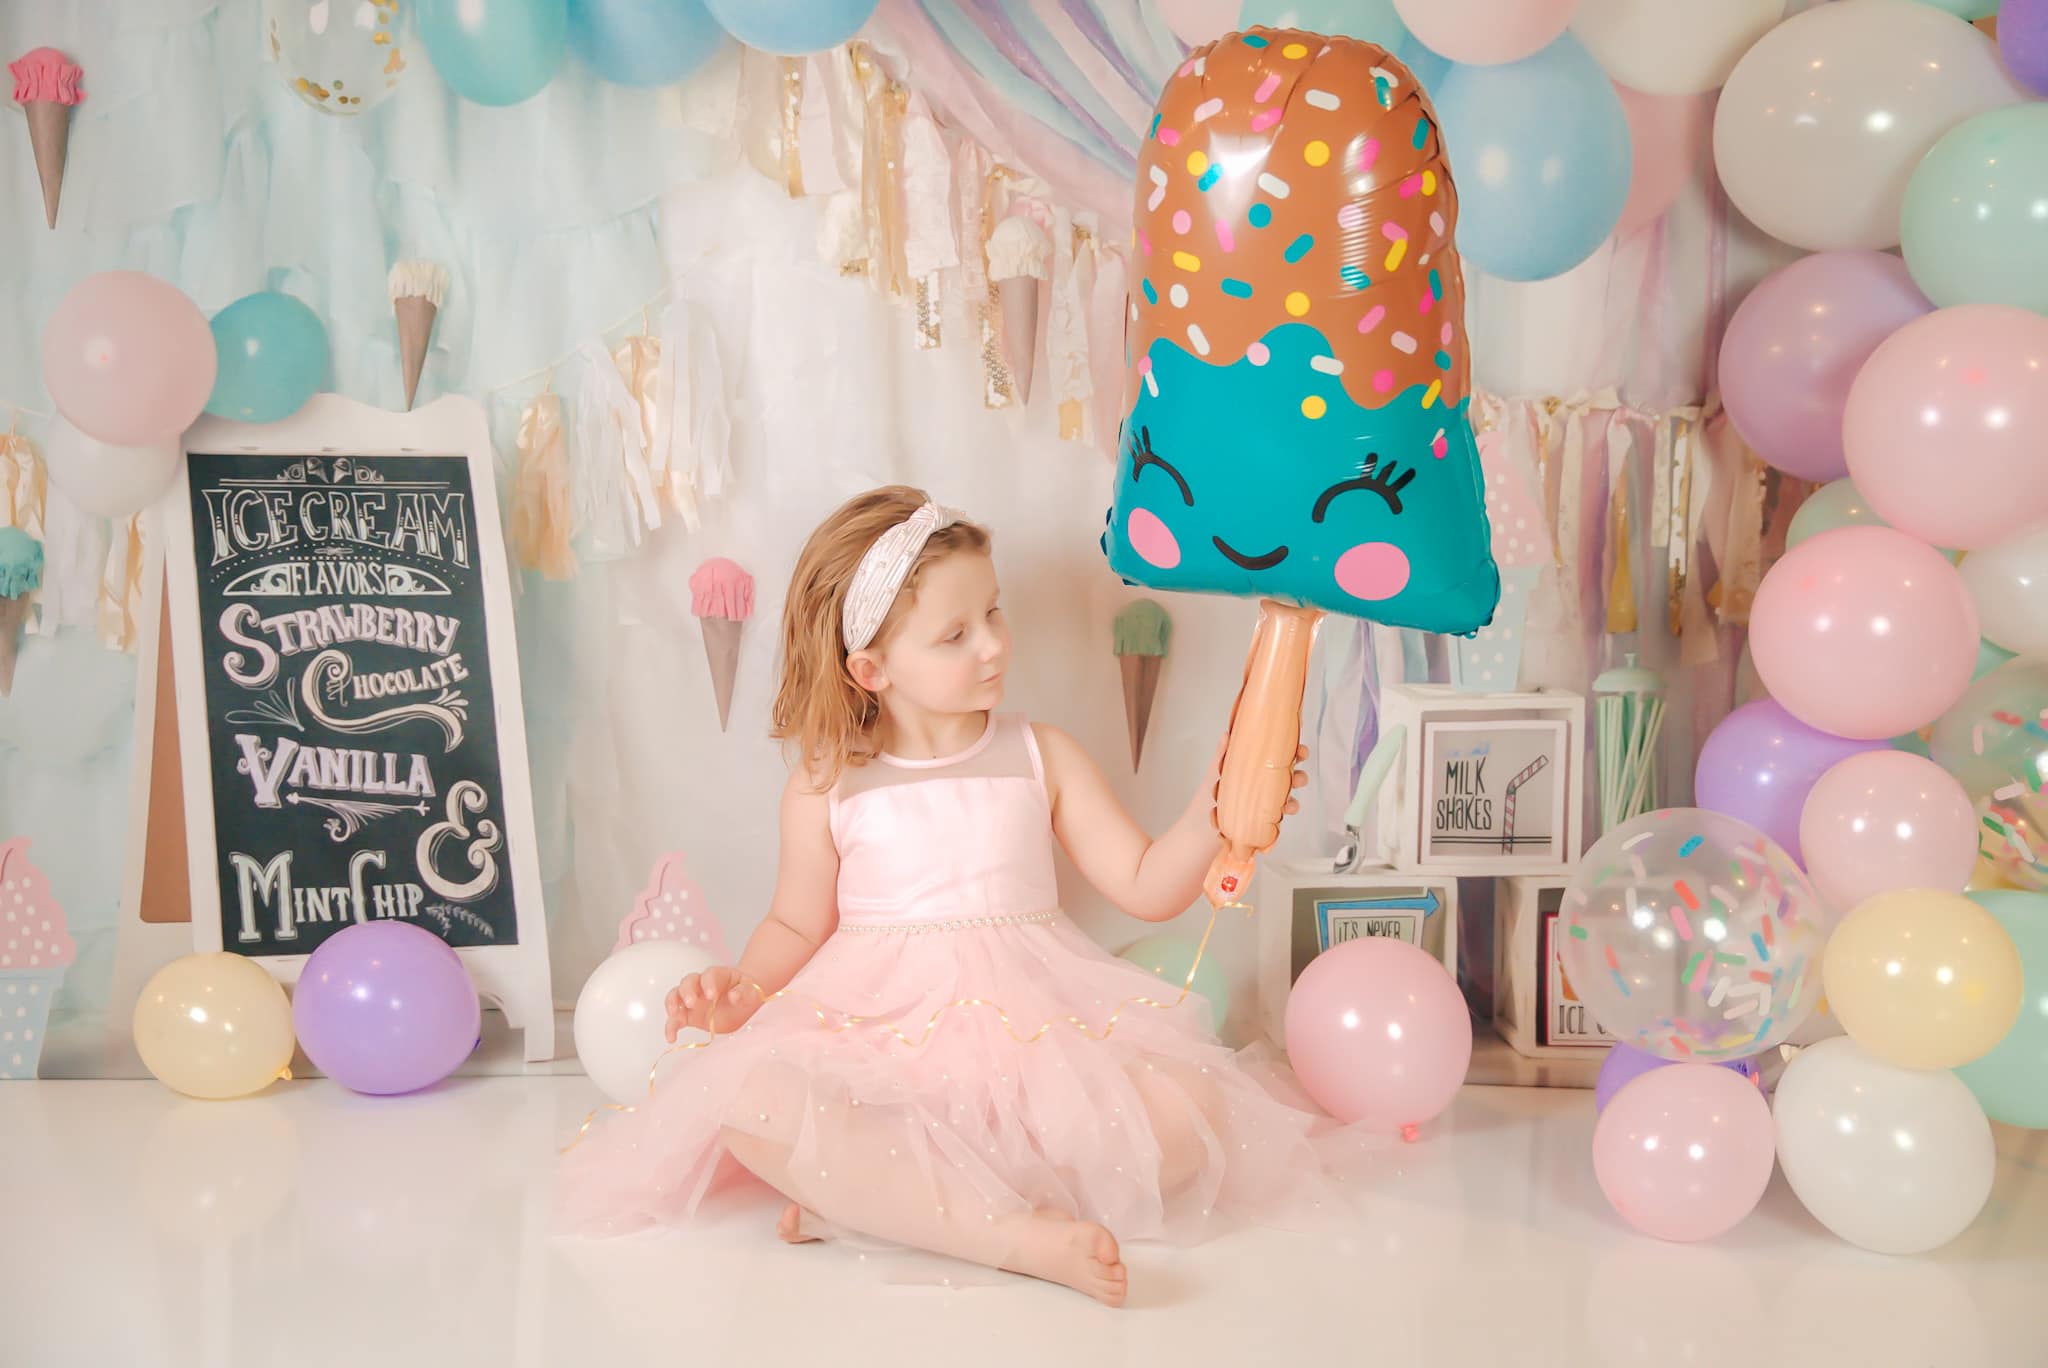 Kate Pastel Ice Cream Backdrop Party Designed by Mandy Ringe Photography